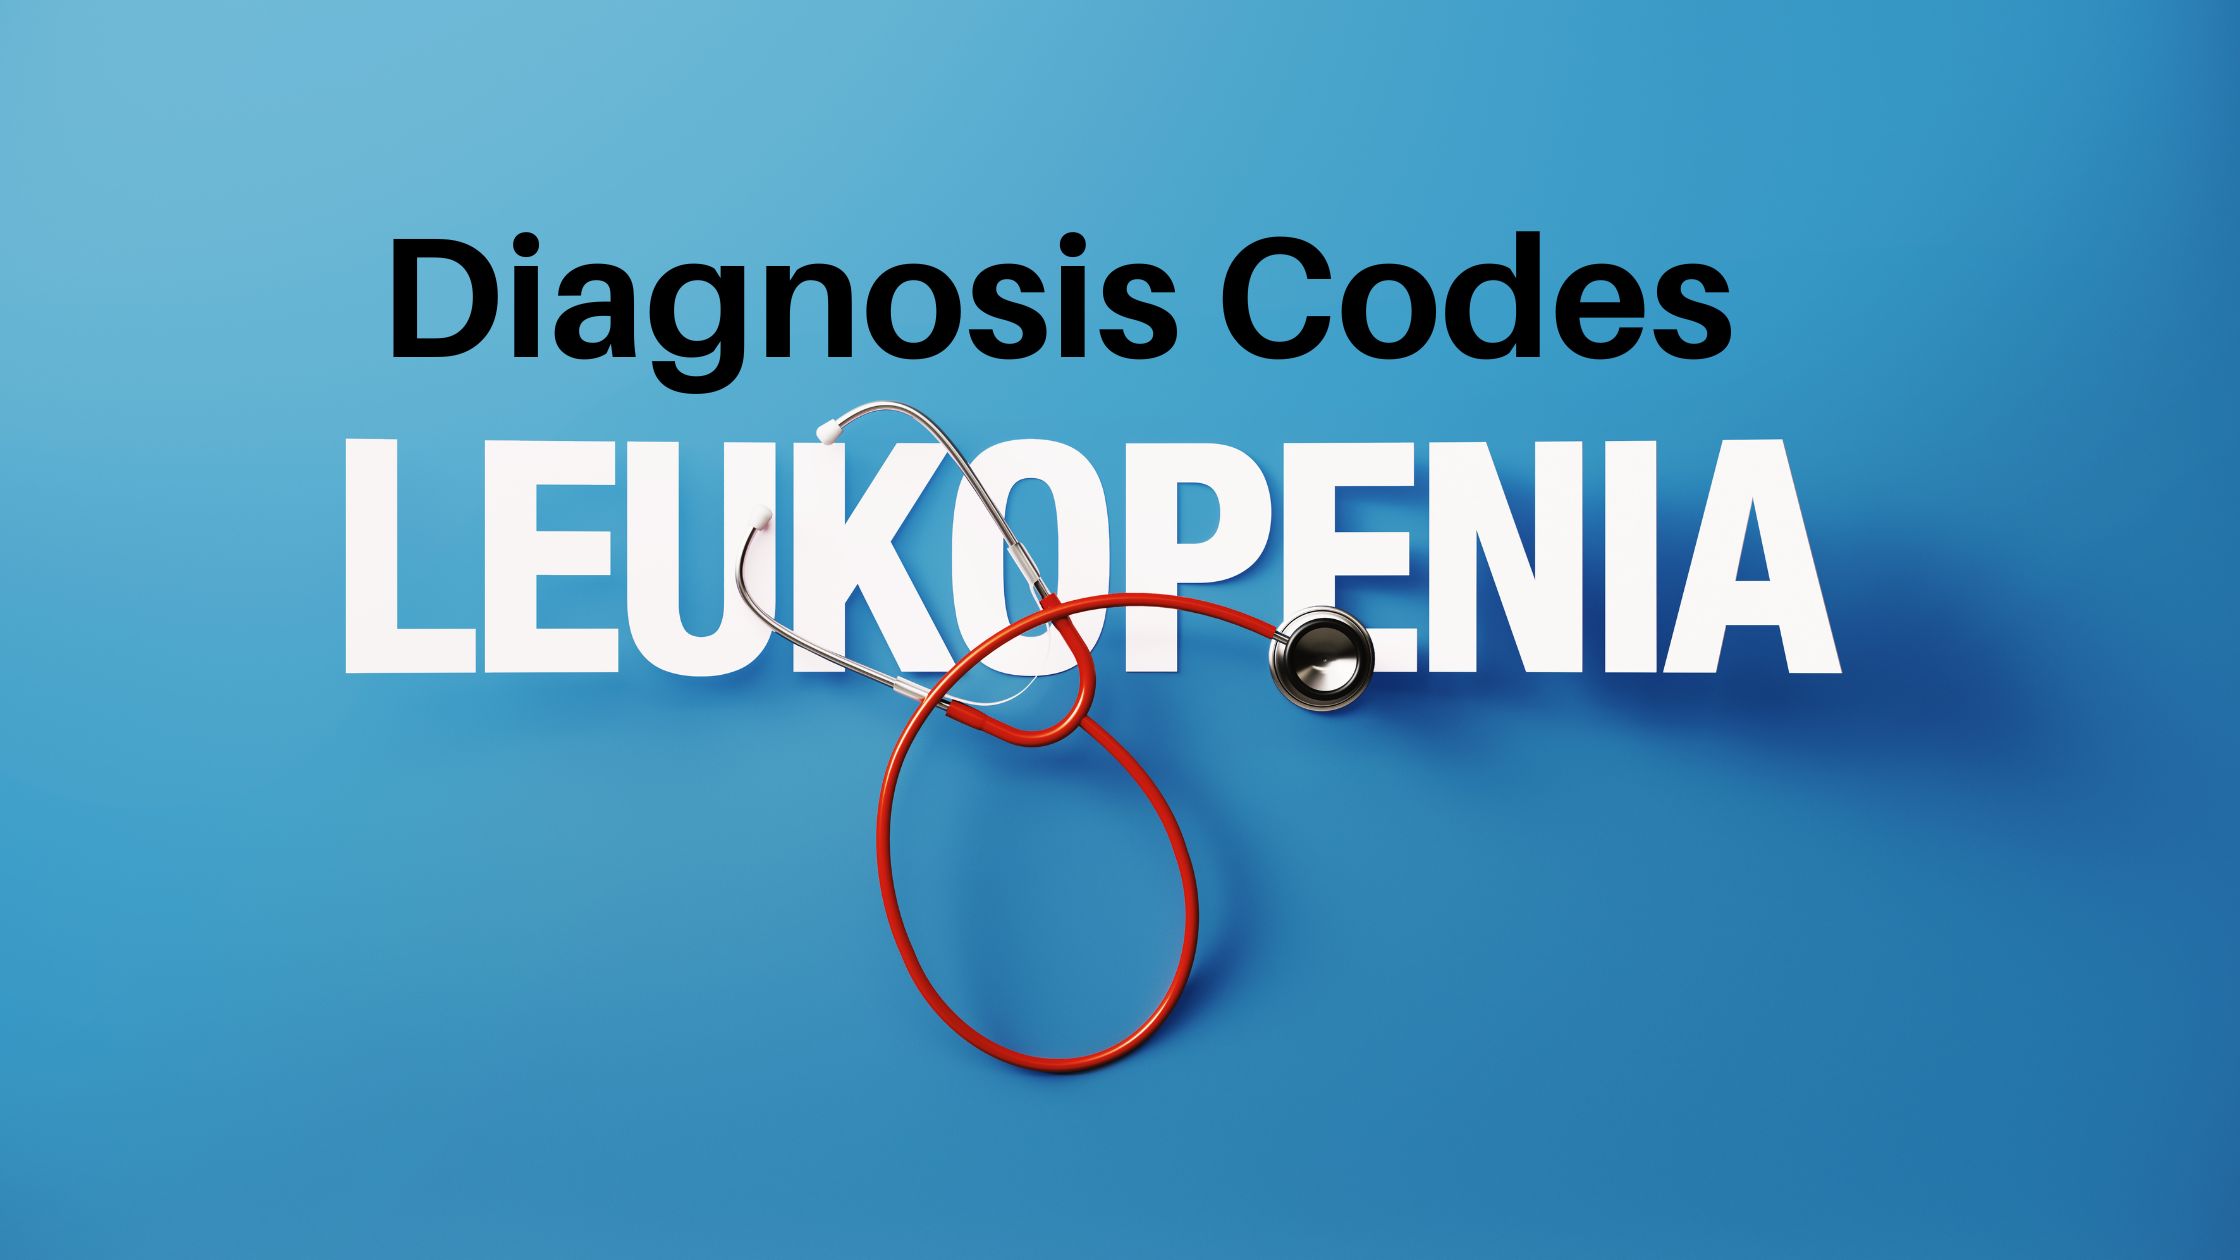 Leukopenia diagnosis codes icd10 cm code for leukopenia